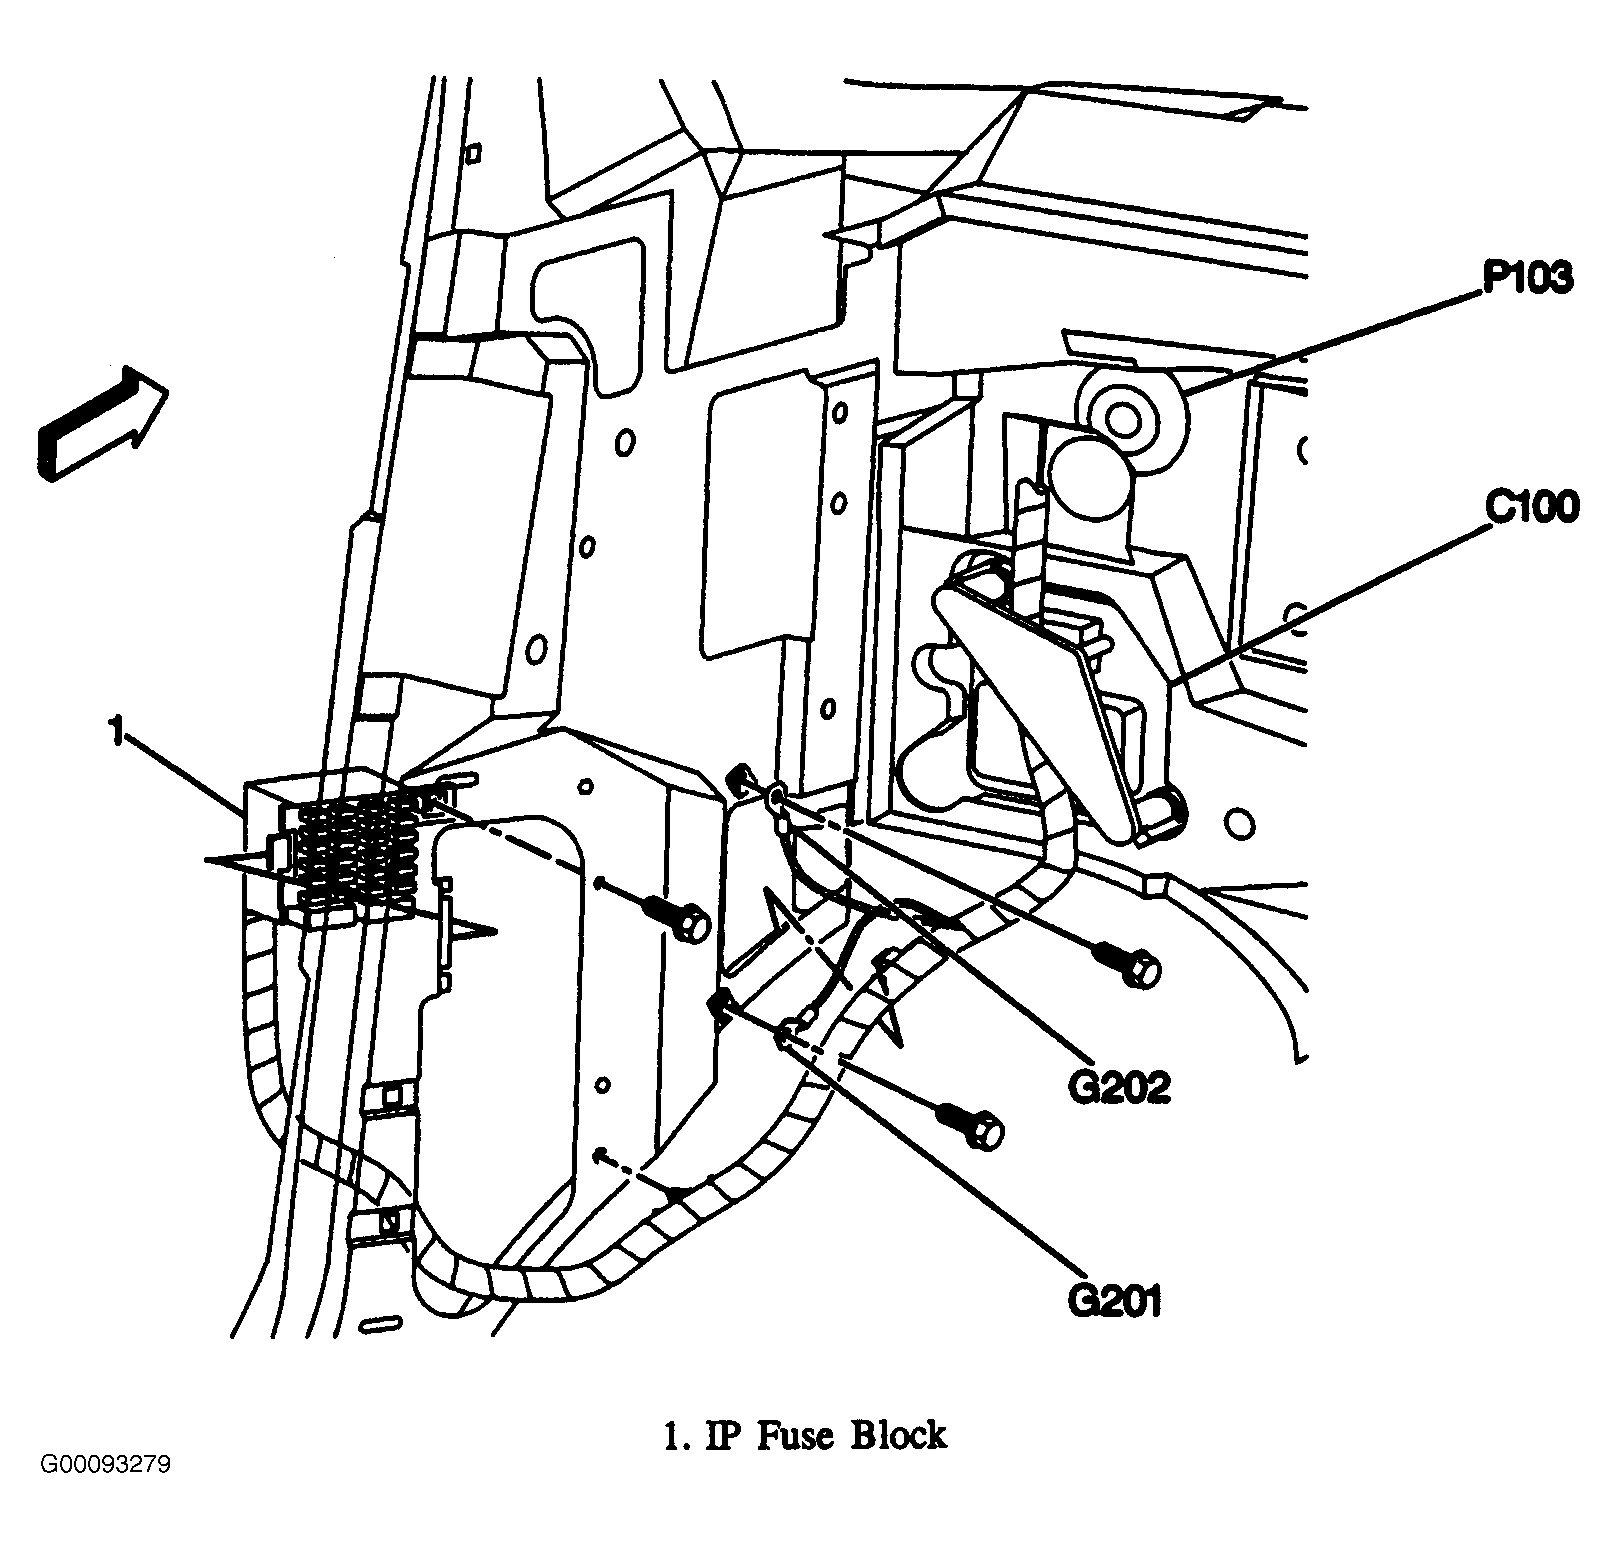 Chevrolet Chevy Van G1500 1996 - Component Locations -  Locating Instrument Panel Fuse Block